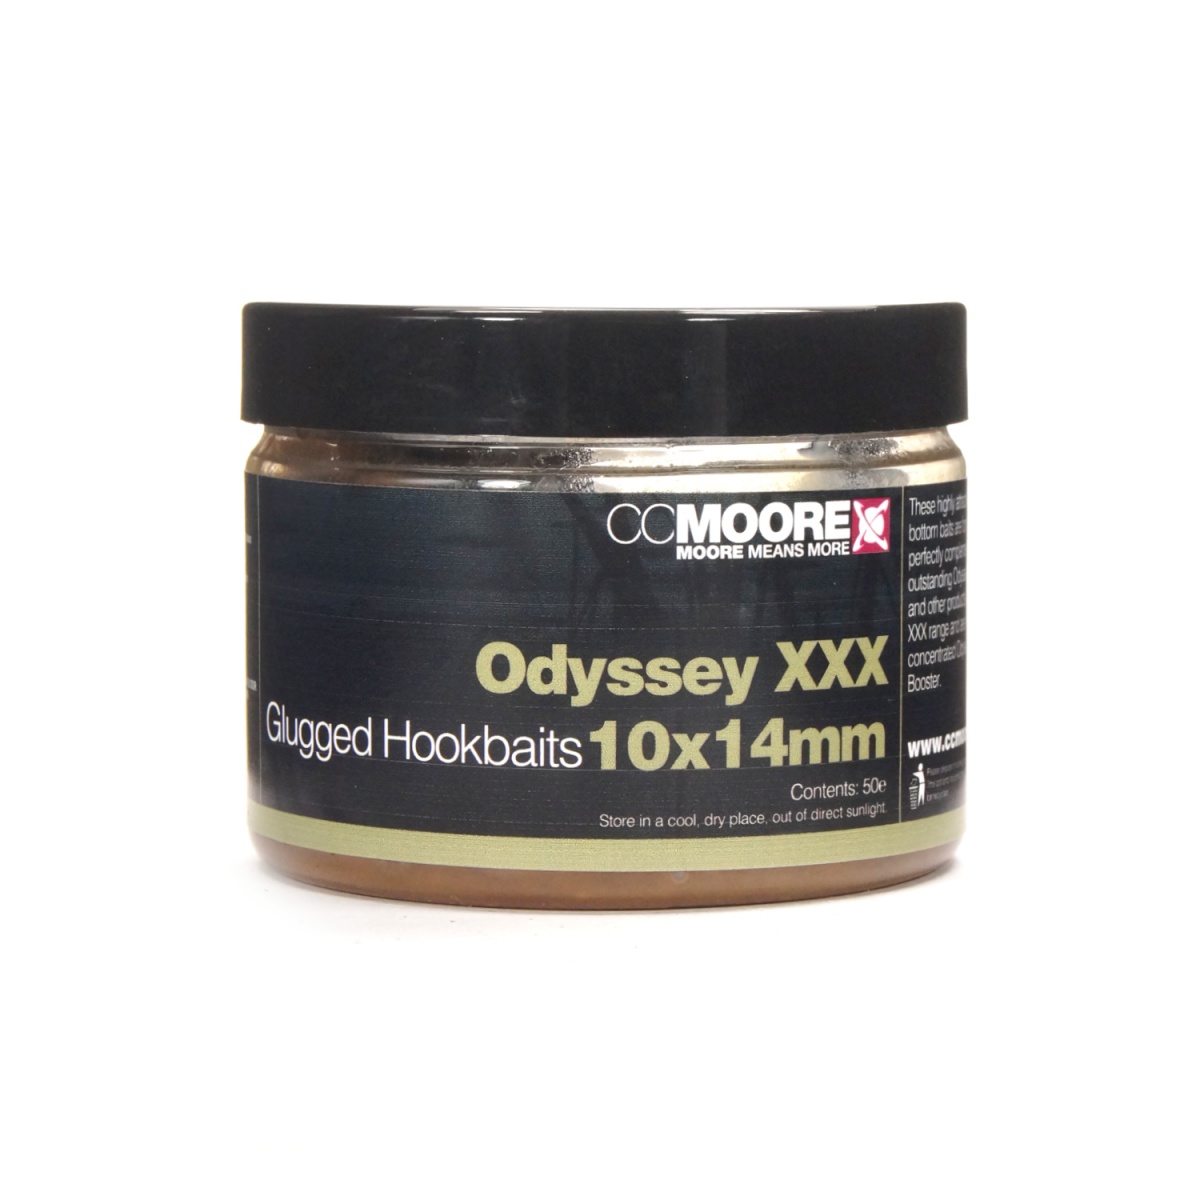 NEW CCMOORE Glugged Hookbaits Odyssey XXX 10 x 14 mm rozmiar